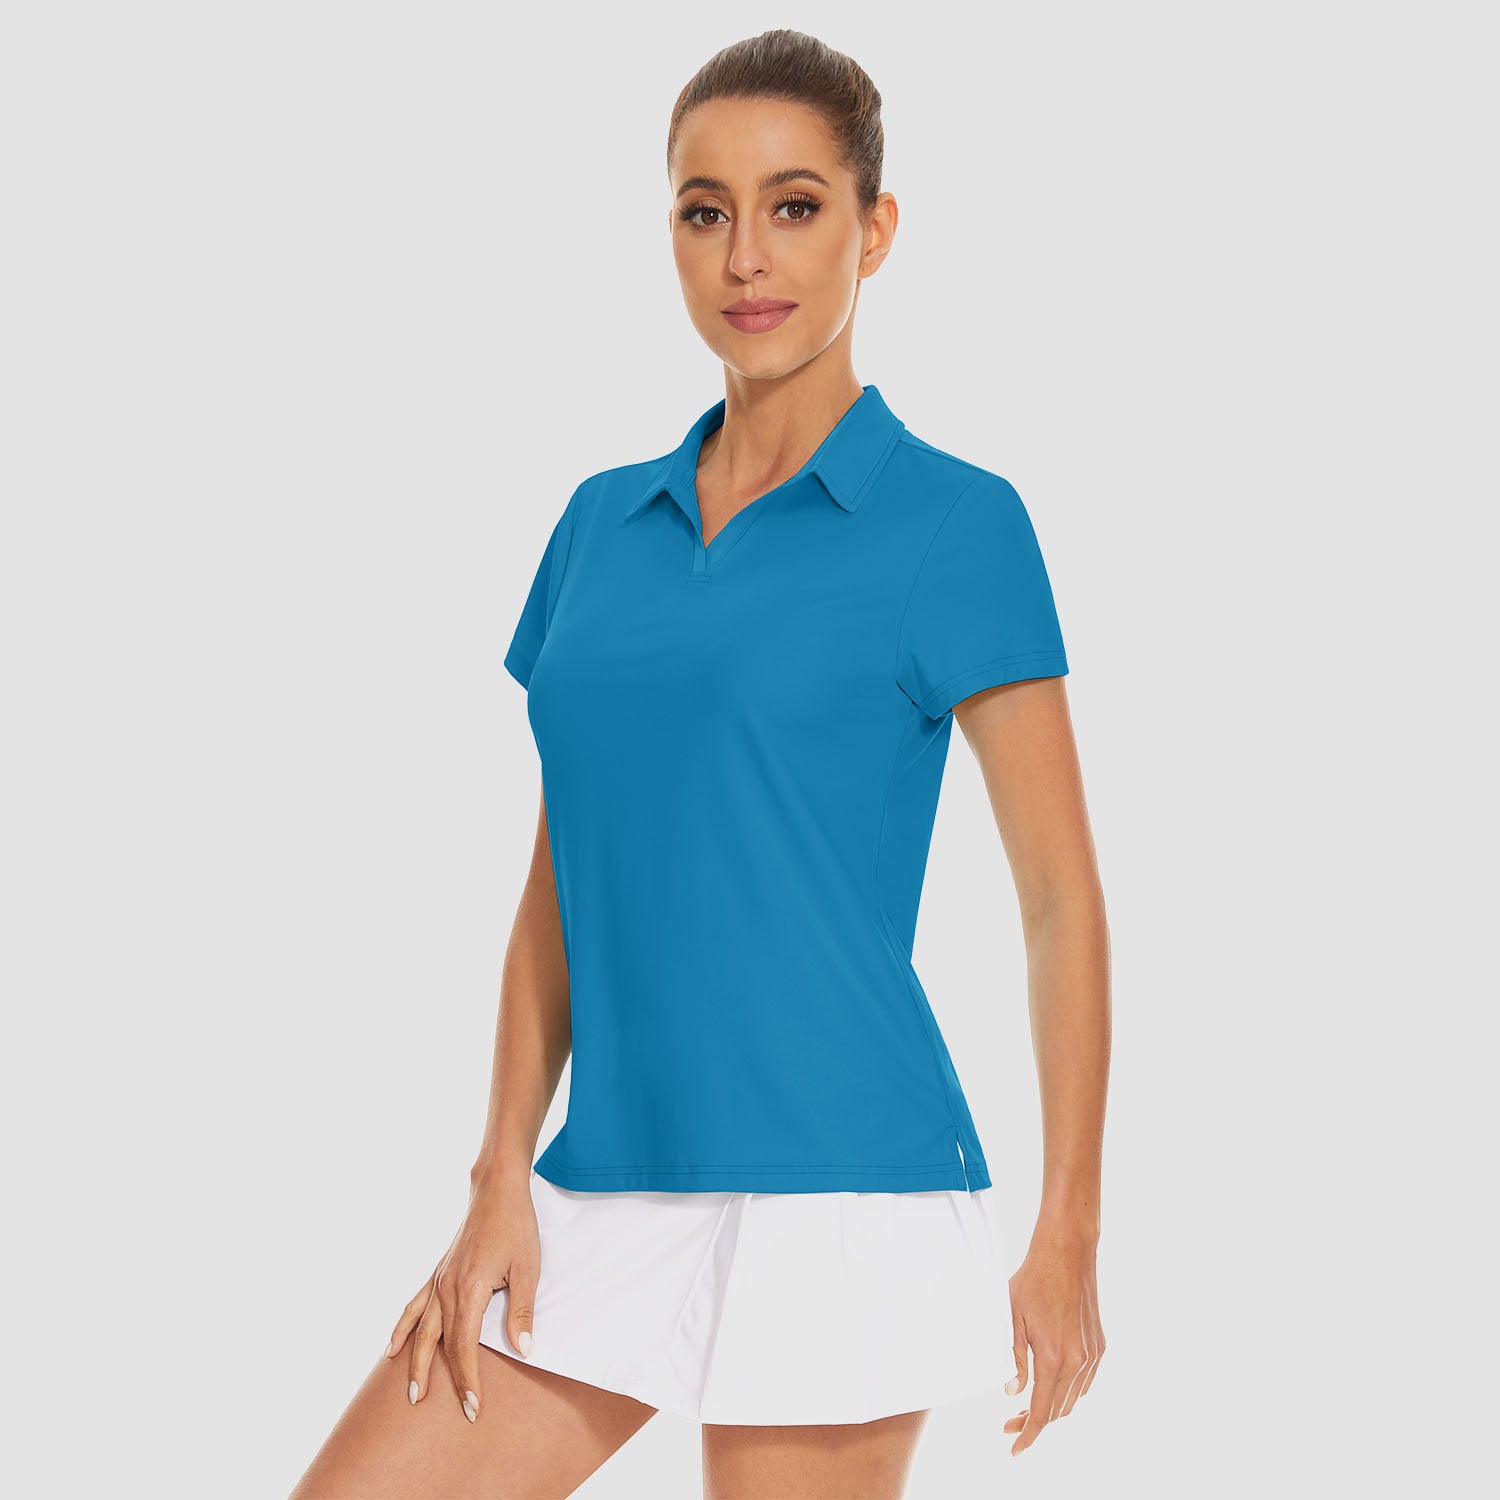 Women's Golf Polo Shirts V Neck UPF 50+ Collared Tennis Shirt Lightweight Quick Dry